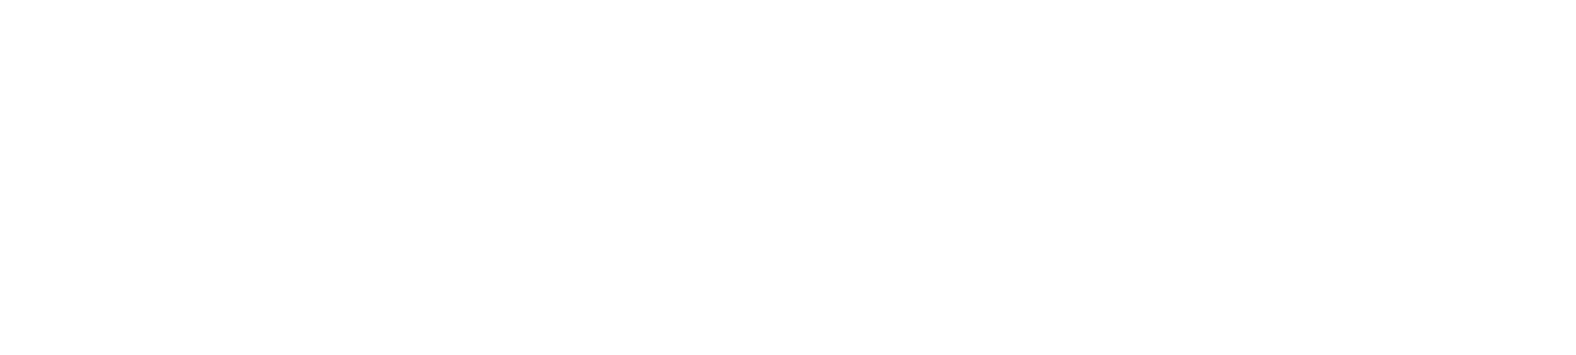 Docebo logo grand pour les fonds sombres (PNG transparent)